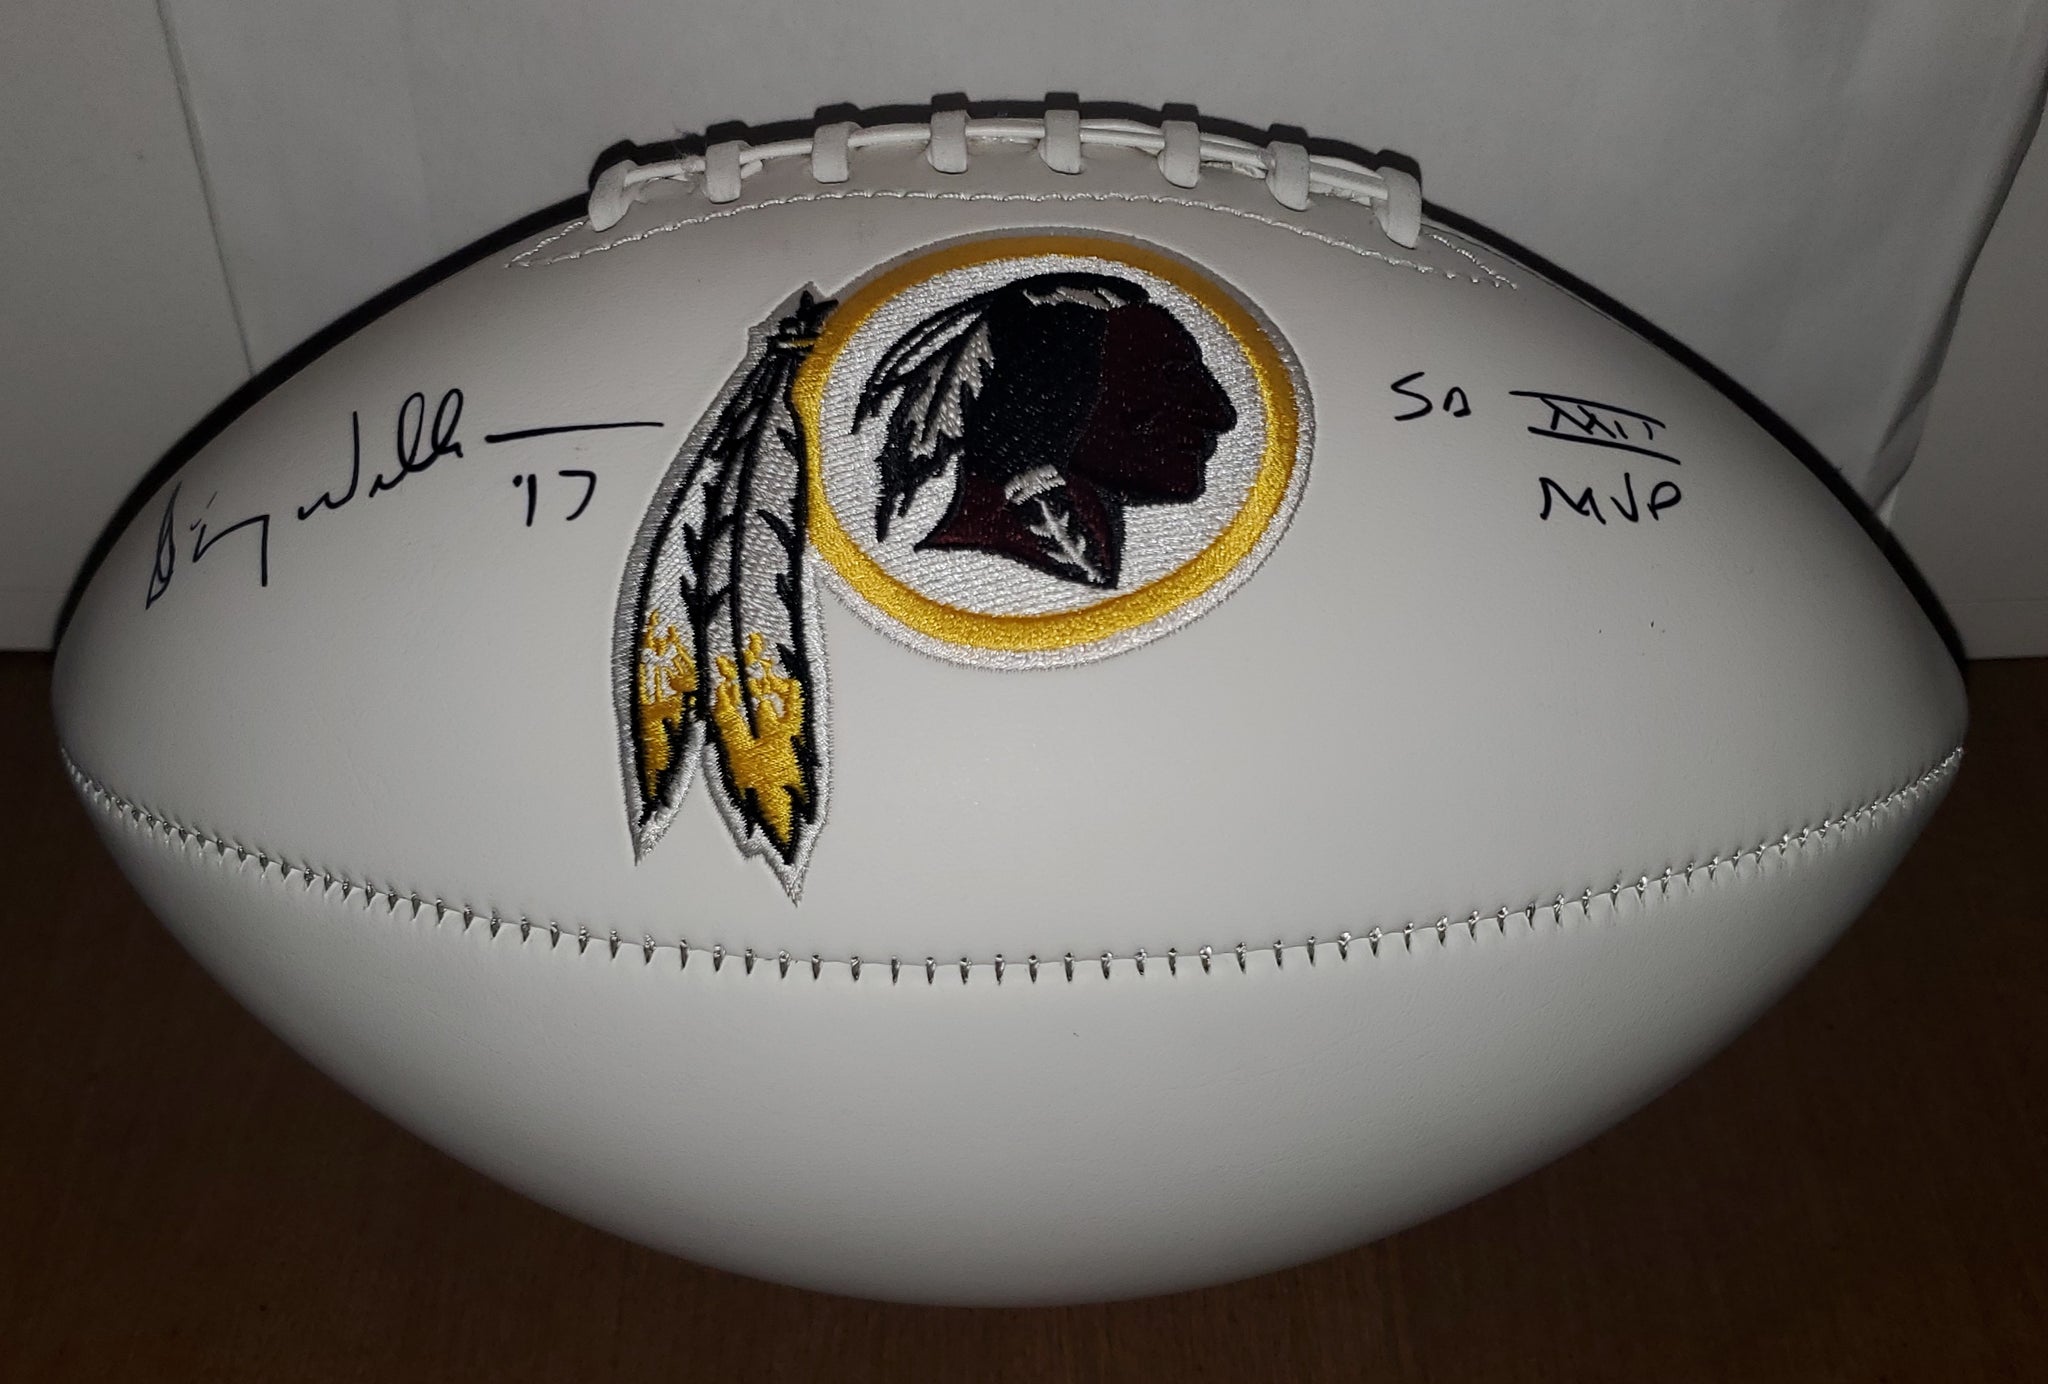 Washington Redskins Doug Williams Autographed Football with Super Bowl XXII MVP Inscription (JSA)